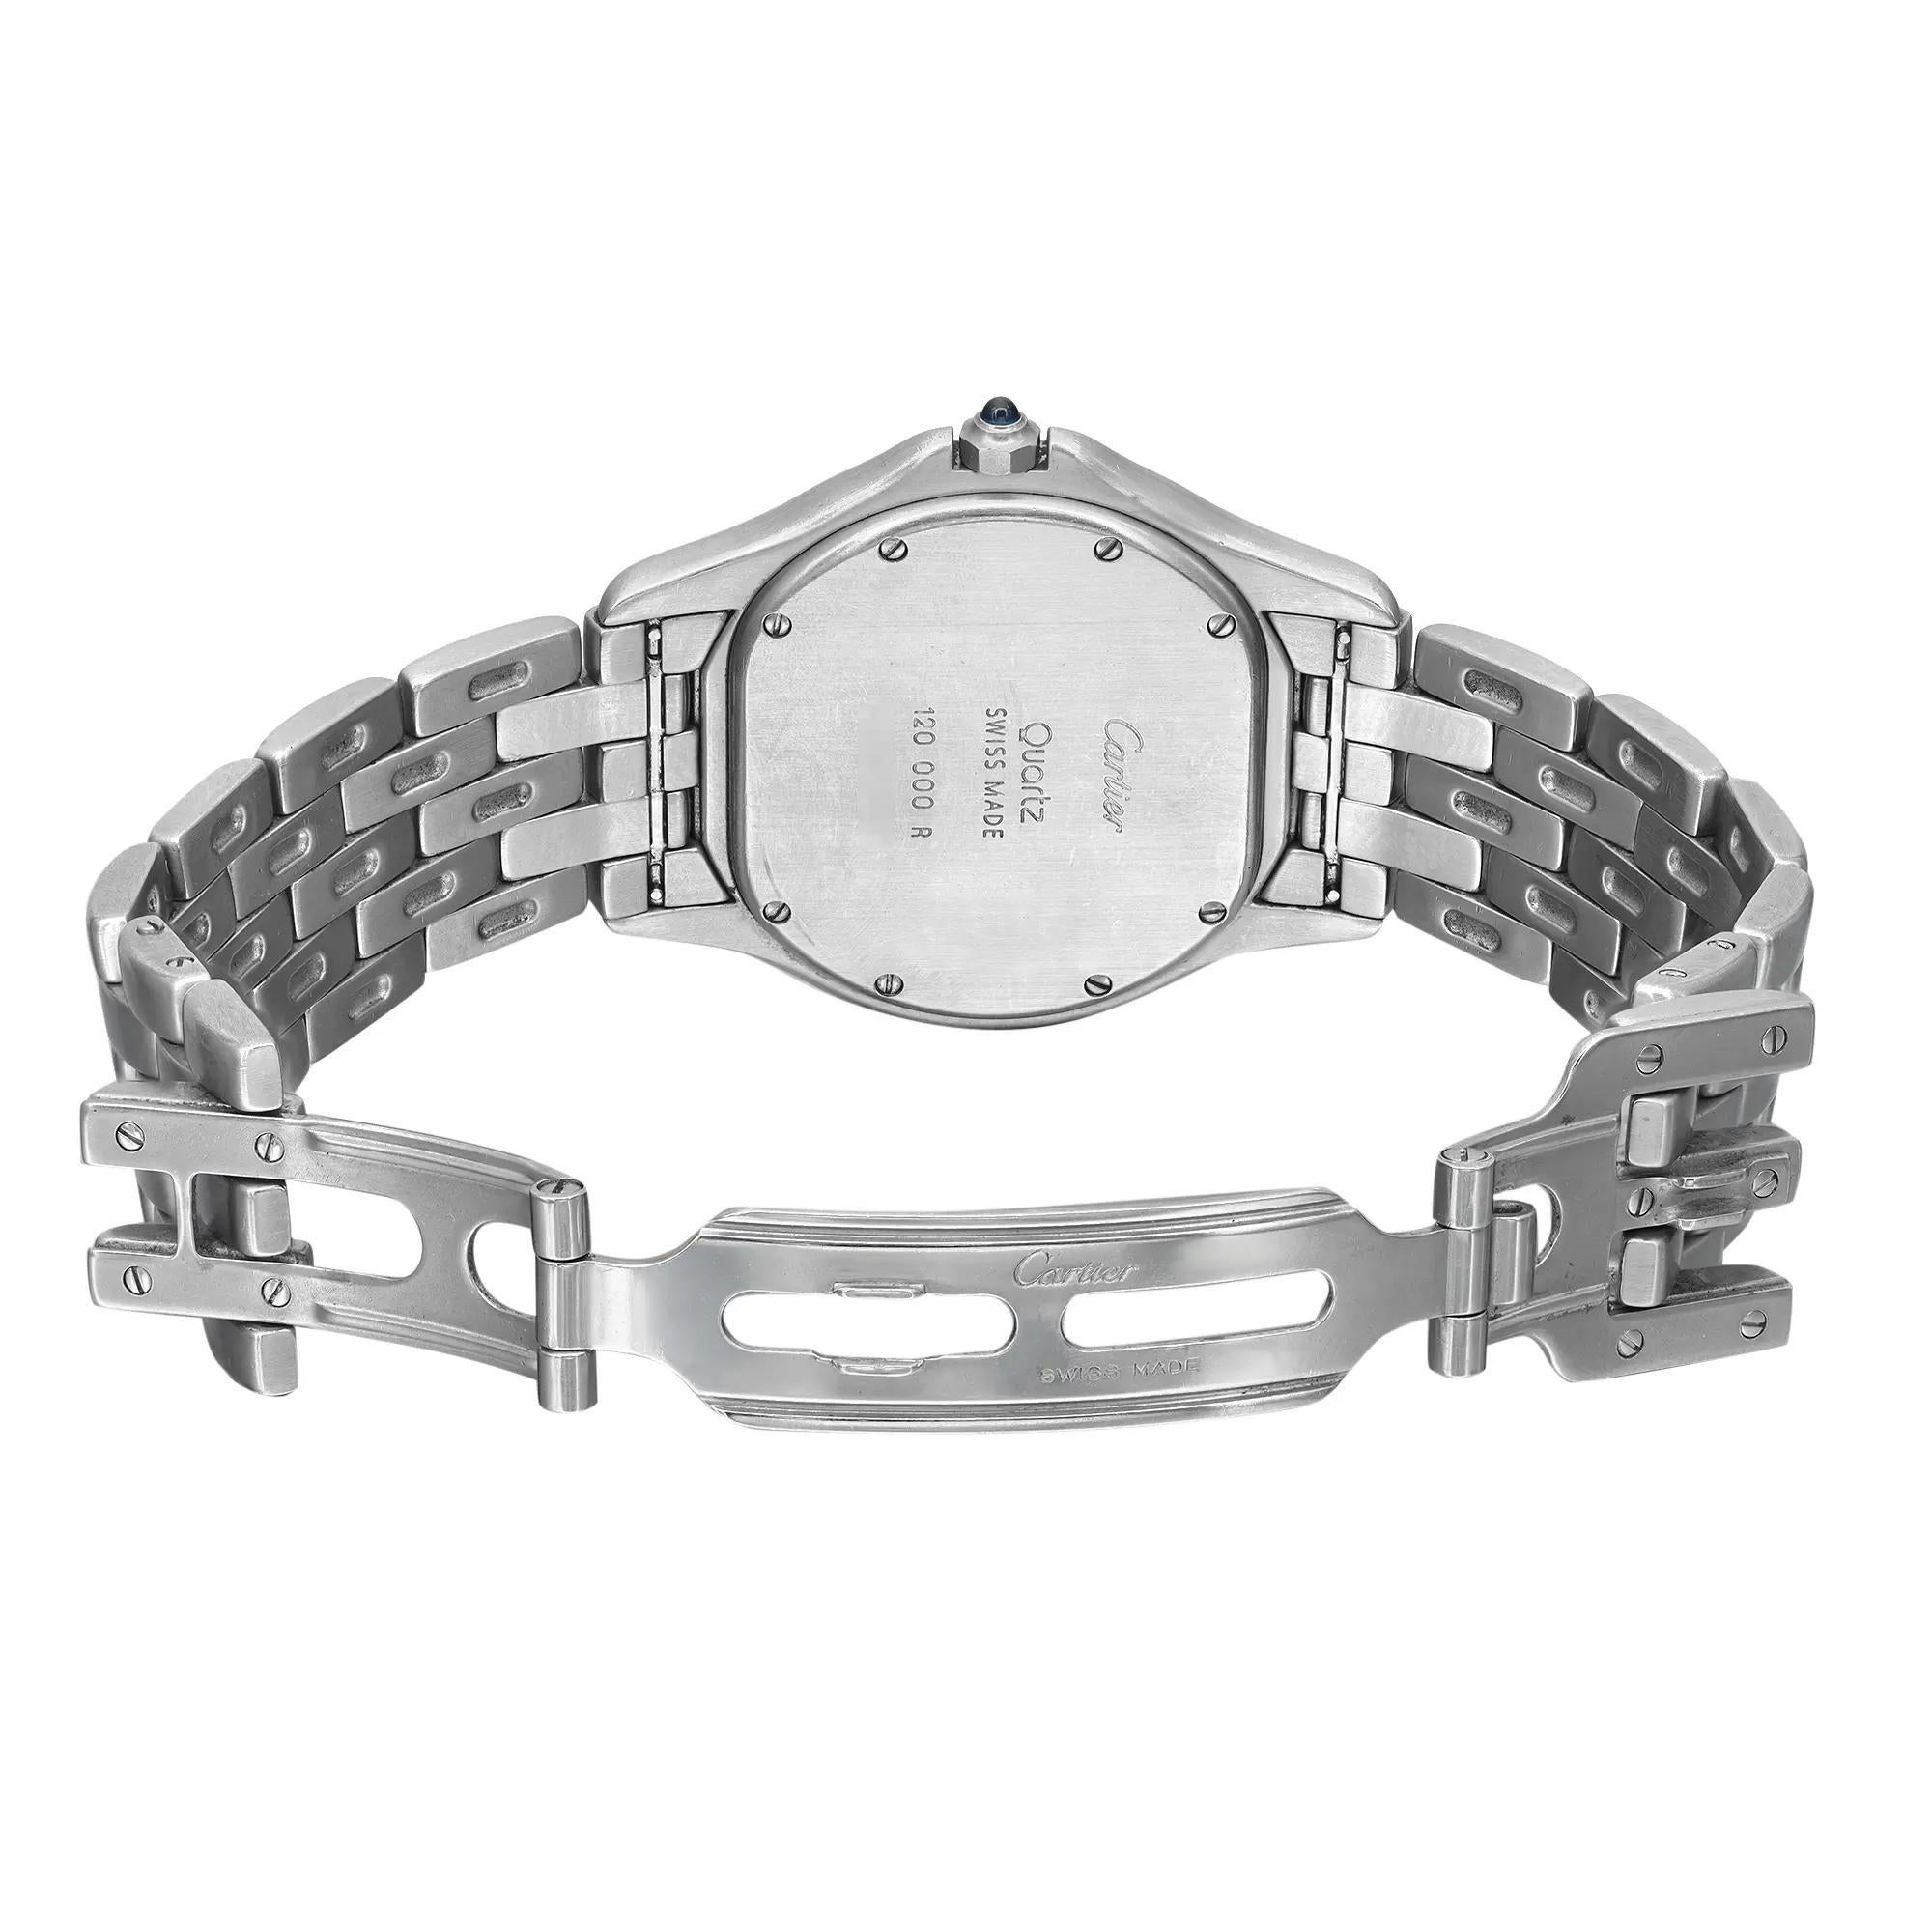 Cartier Cougar Steel Silver Dial Quartz Unisex Watch W35002F5 1